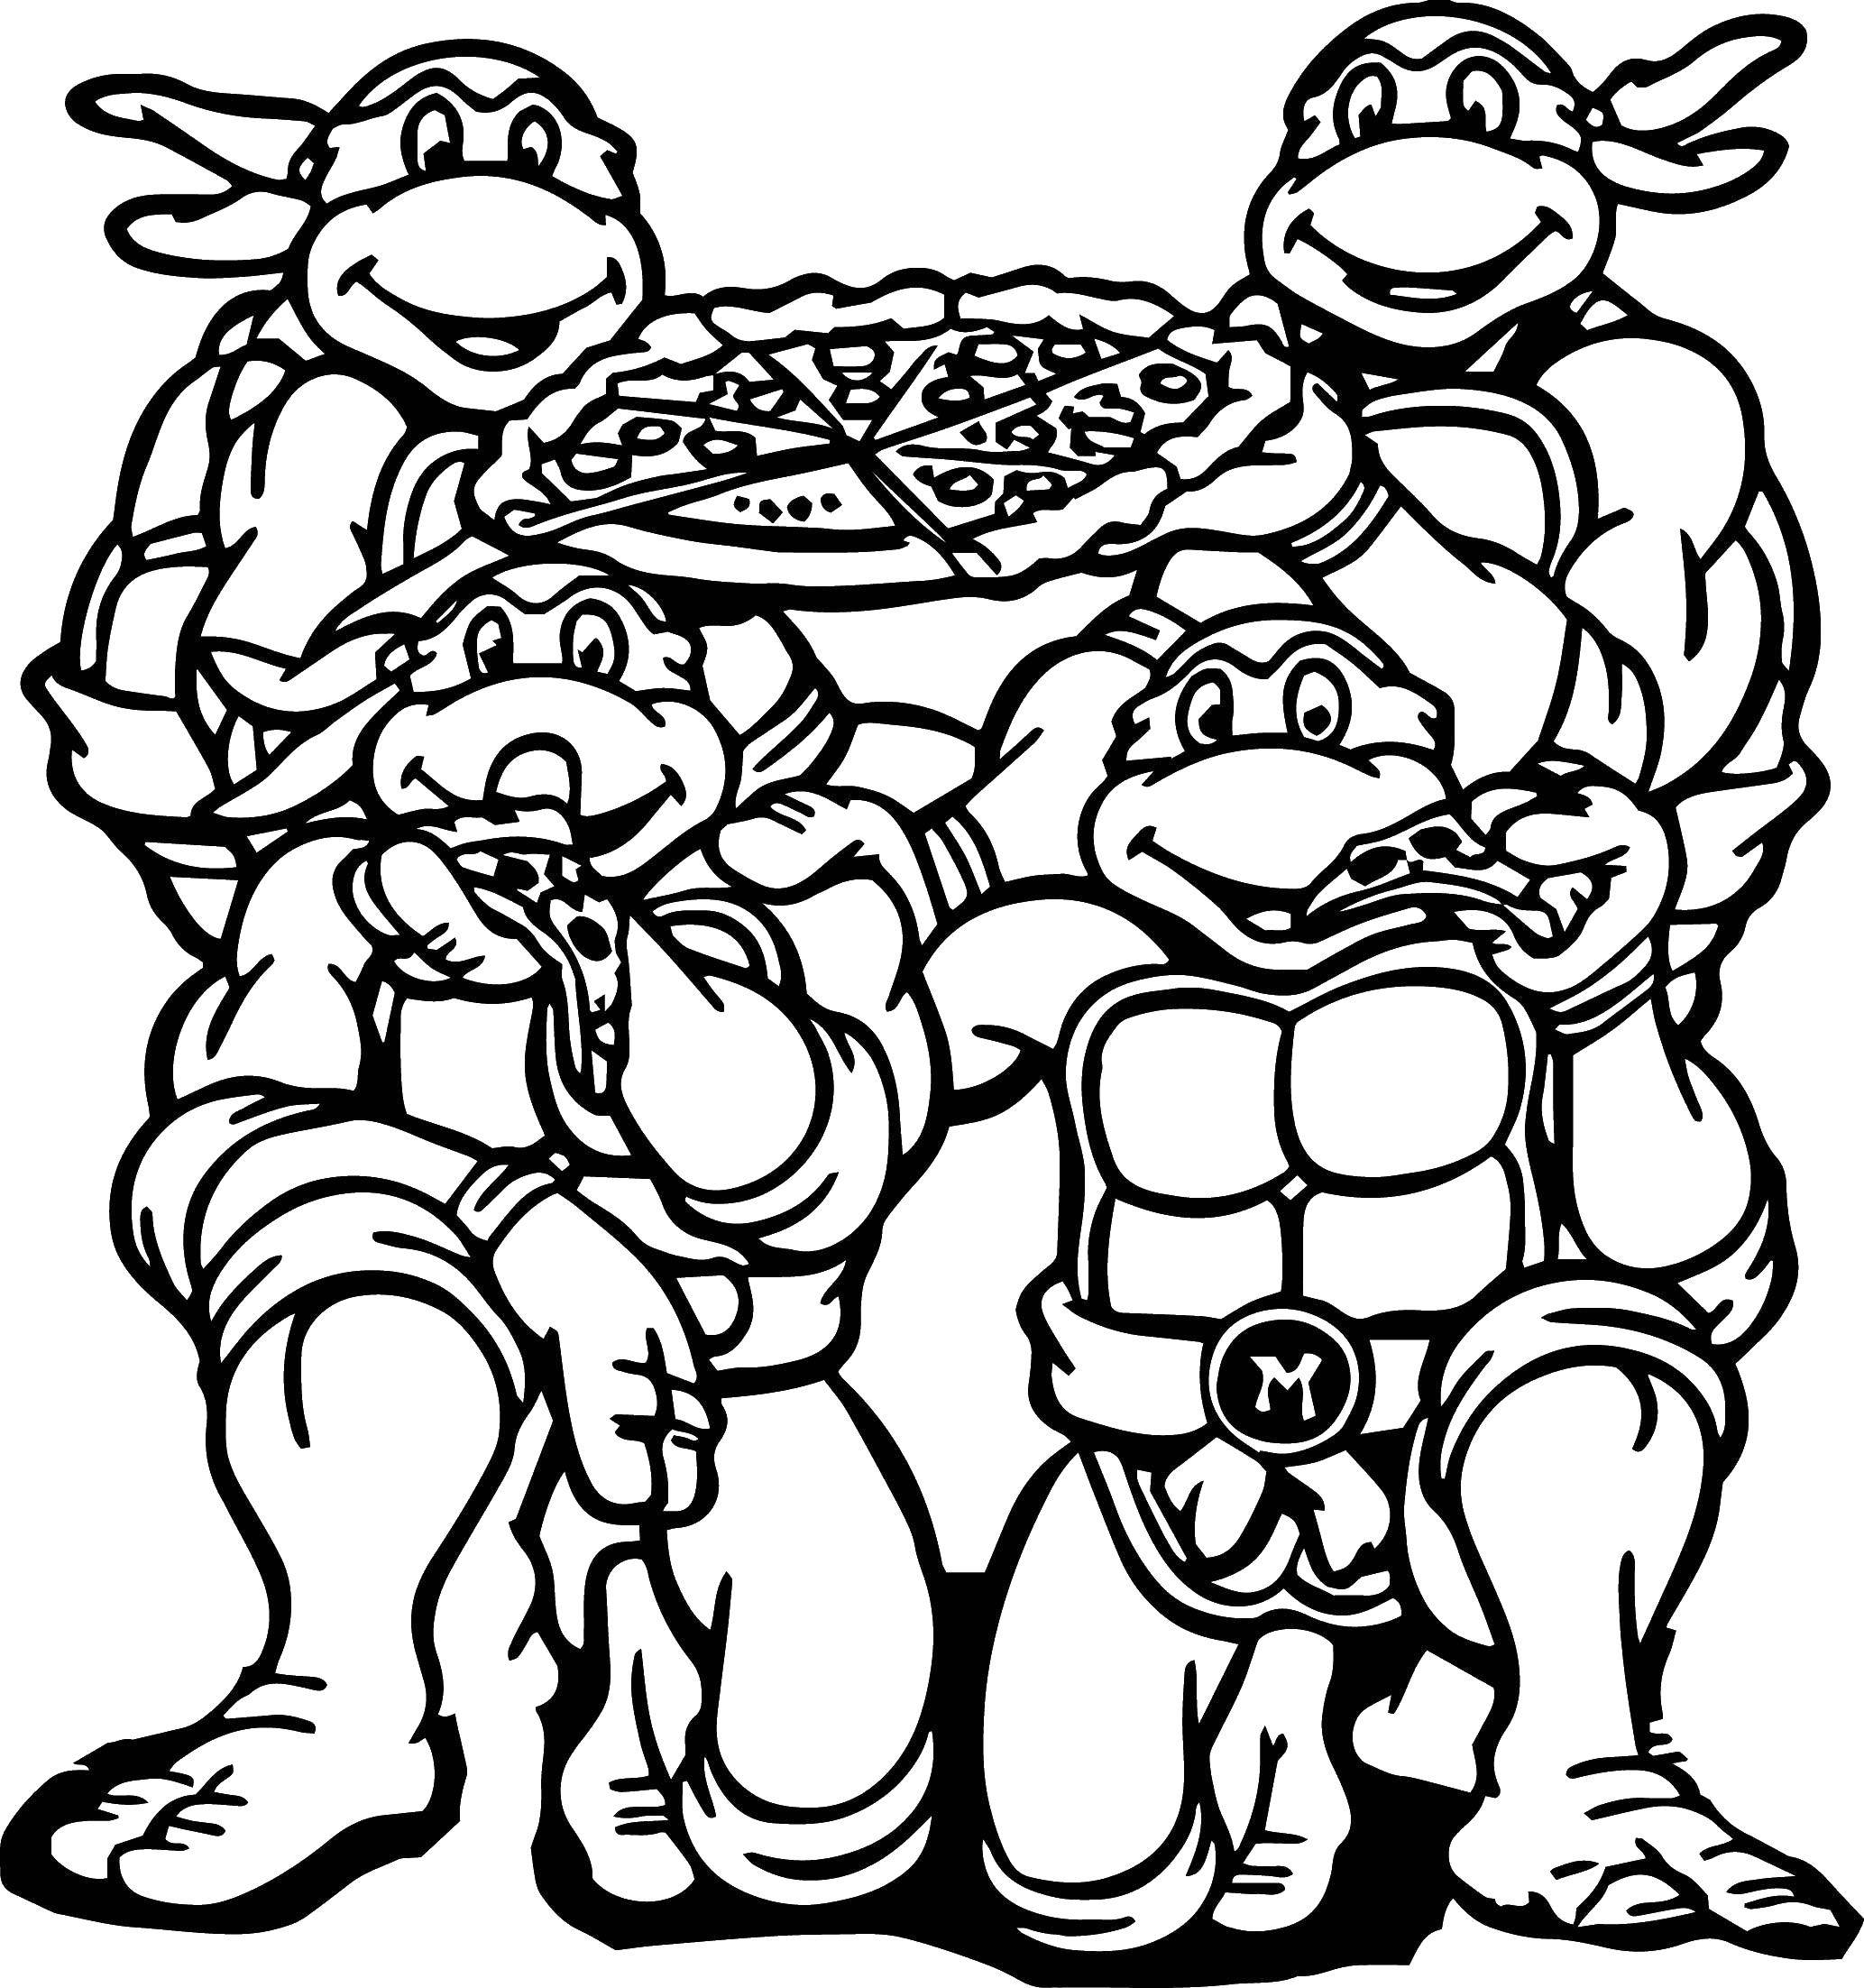 Название: Раскраска Черепашки ниндзя едят пиццу. Категория: ниндзя. Теги: черепашки ниндзя, пицца, черепашки.